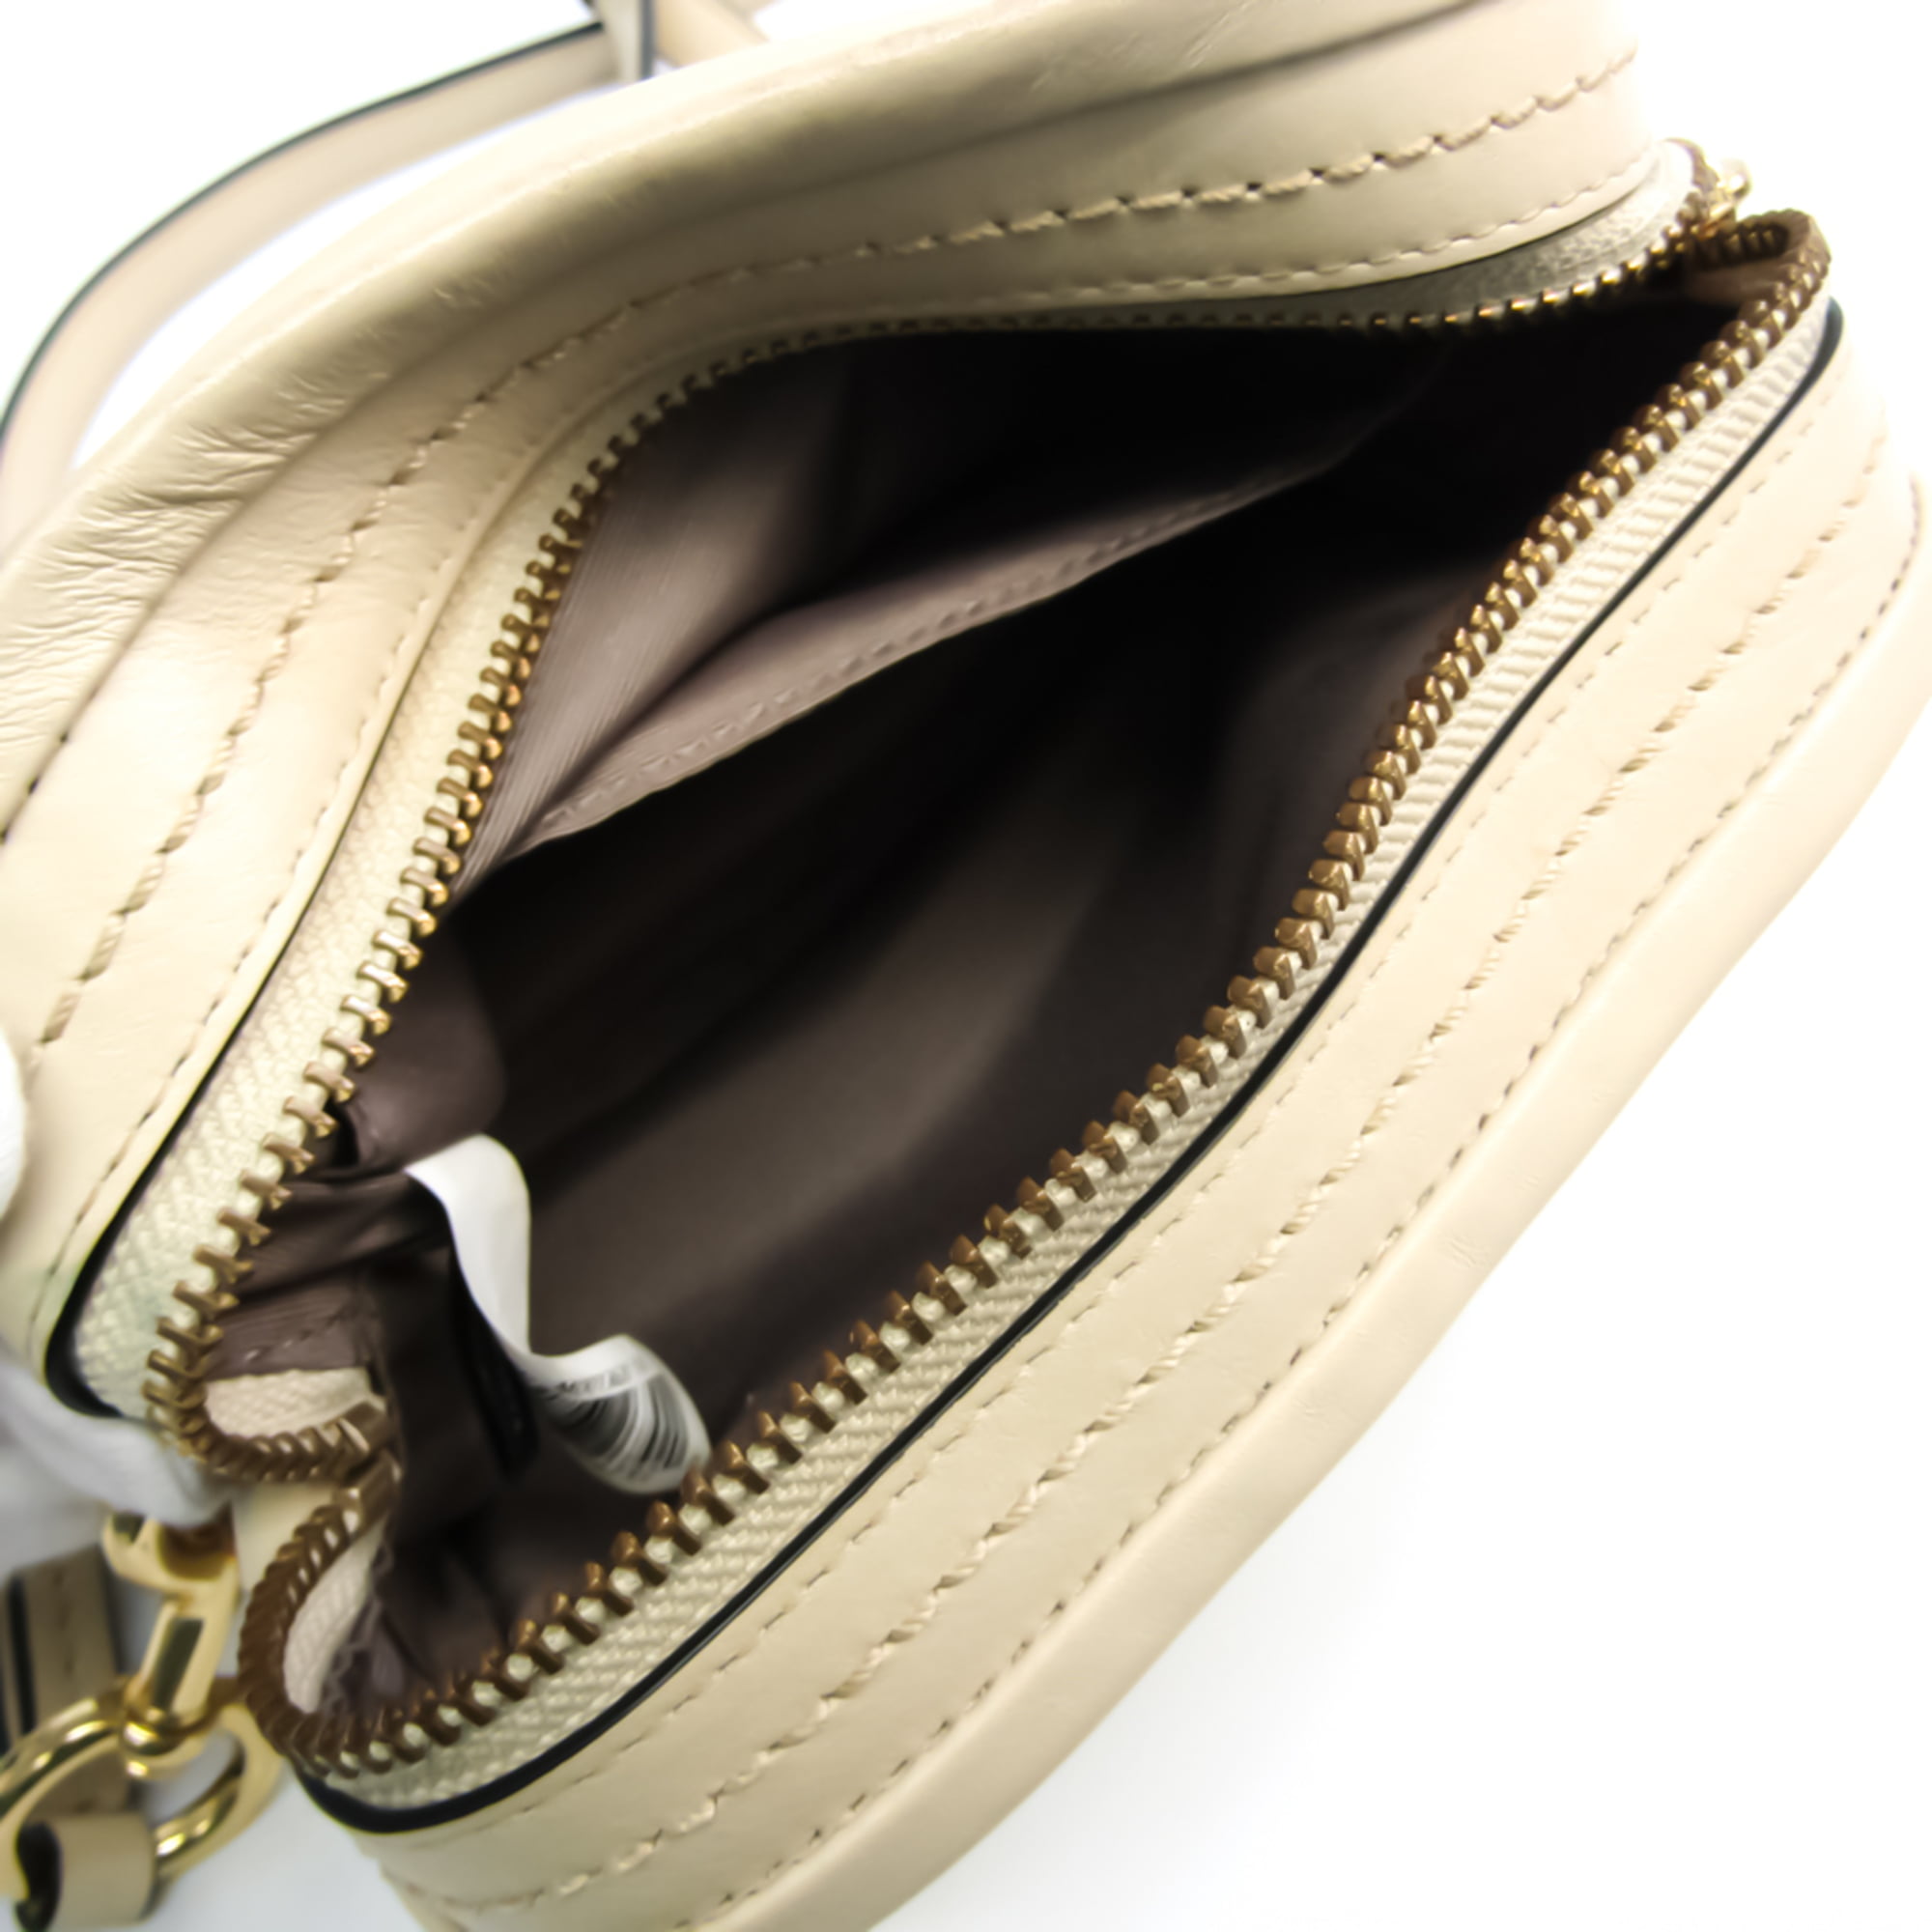 Marc Jacobs Outlet: mini bag for woman - Cream  Marc Jacobs mini bag  H907M06RE22 online at